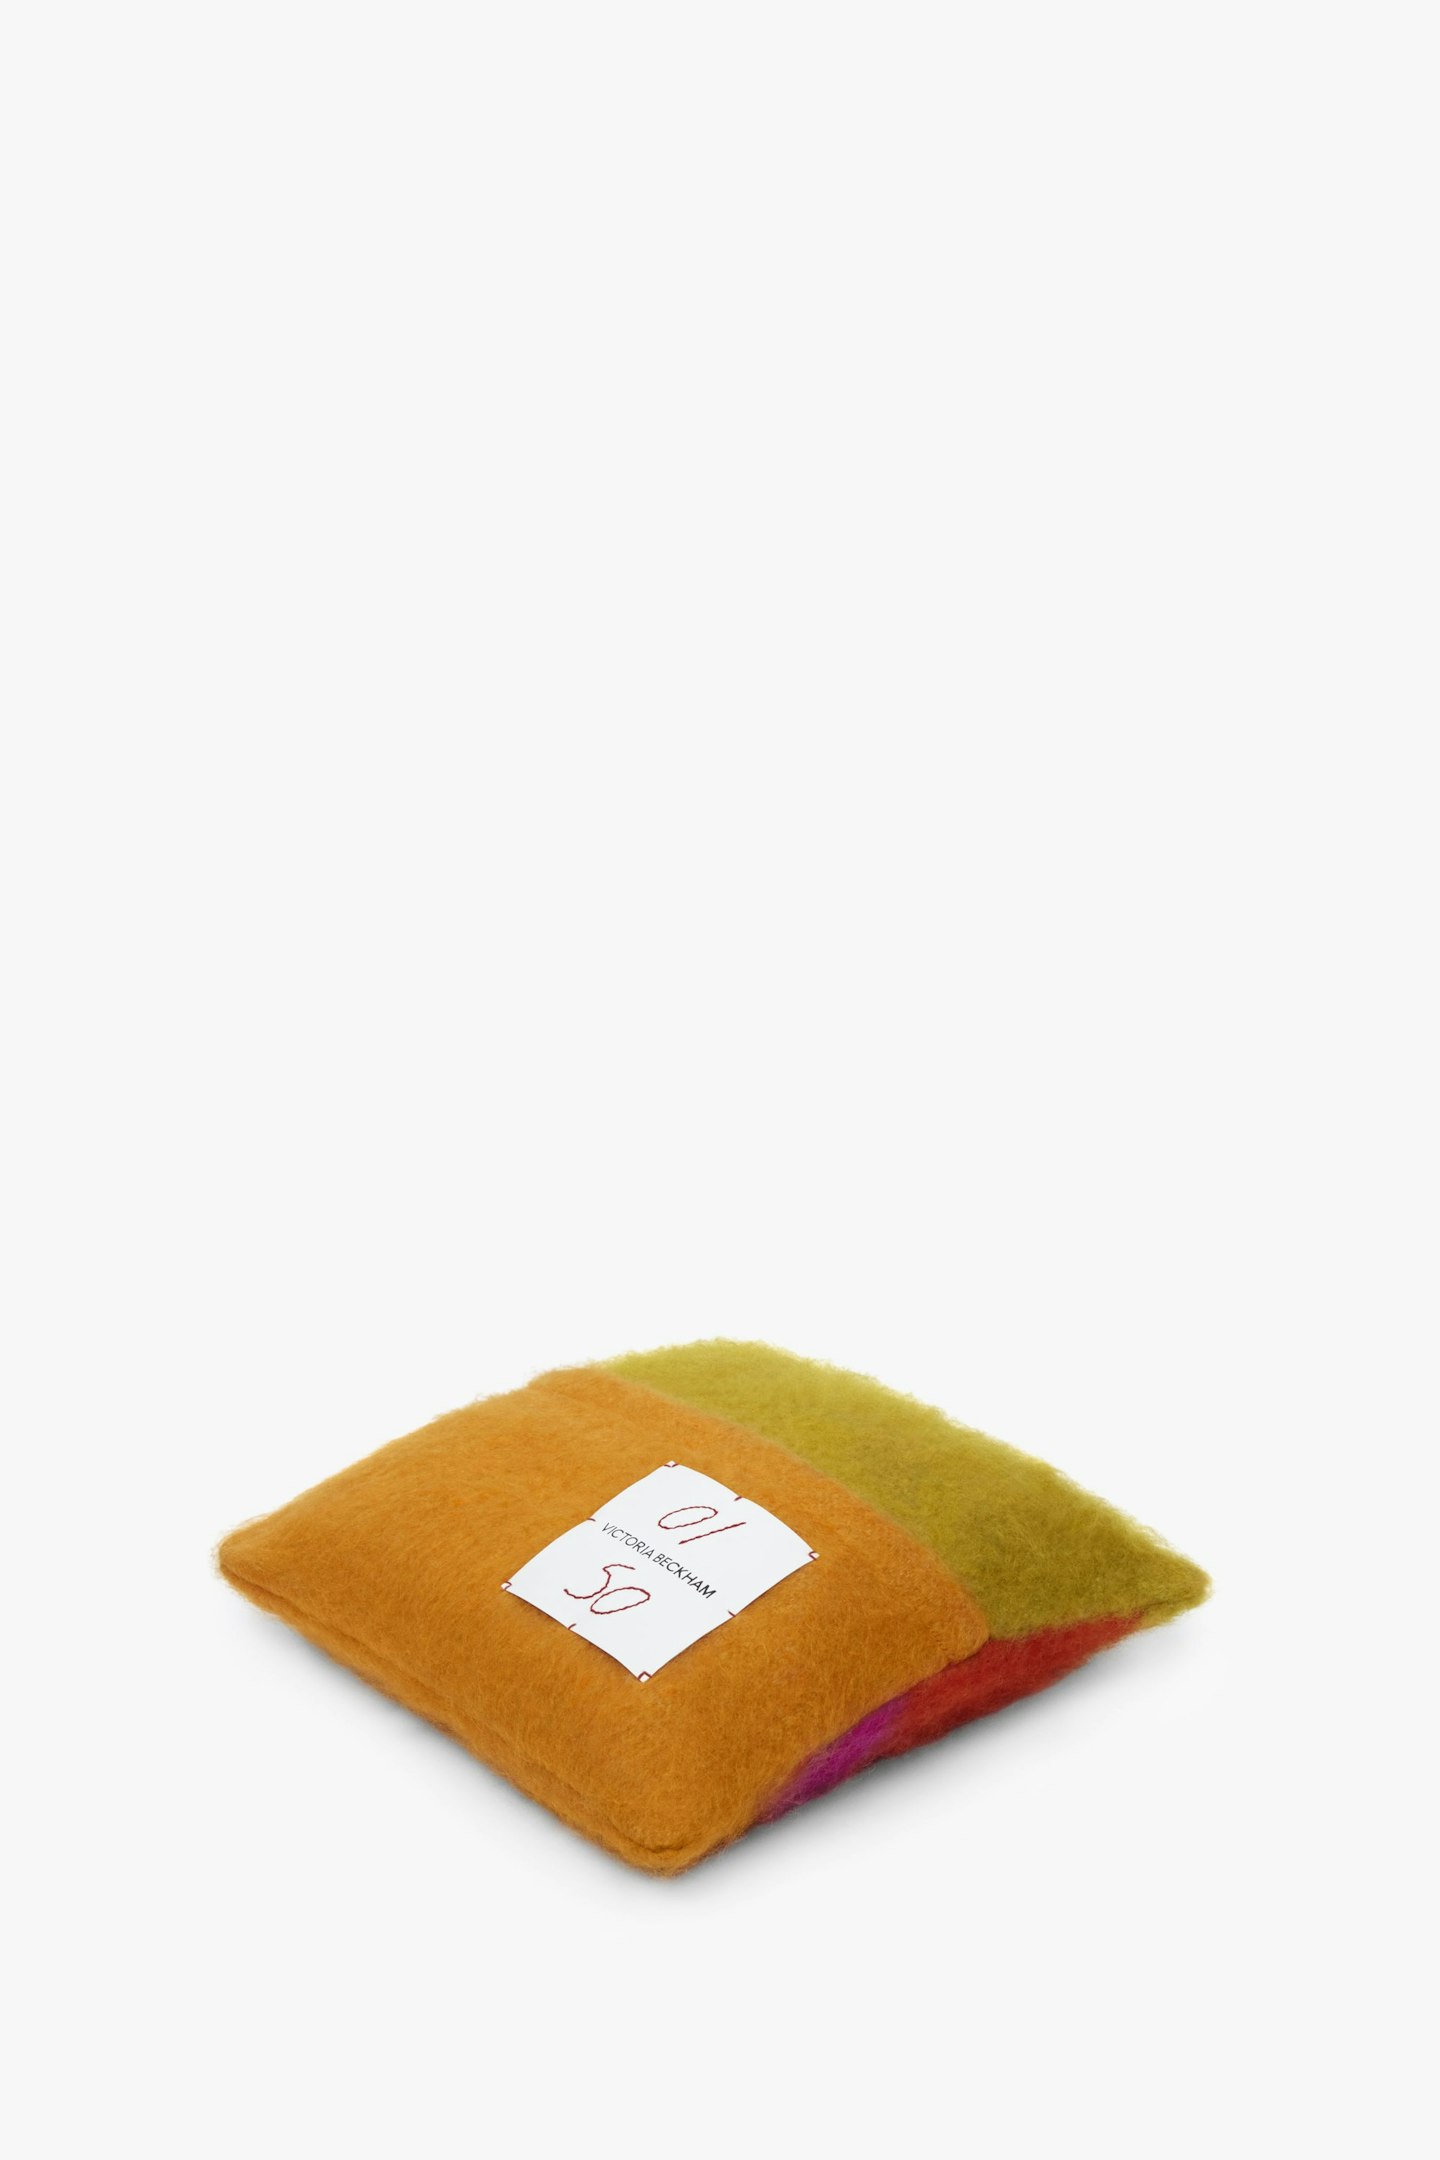 VB, Colour-Block Cushion In Red-Orange Multi, £190